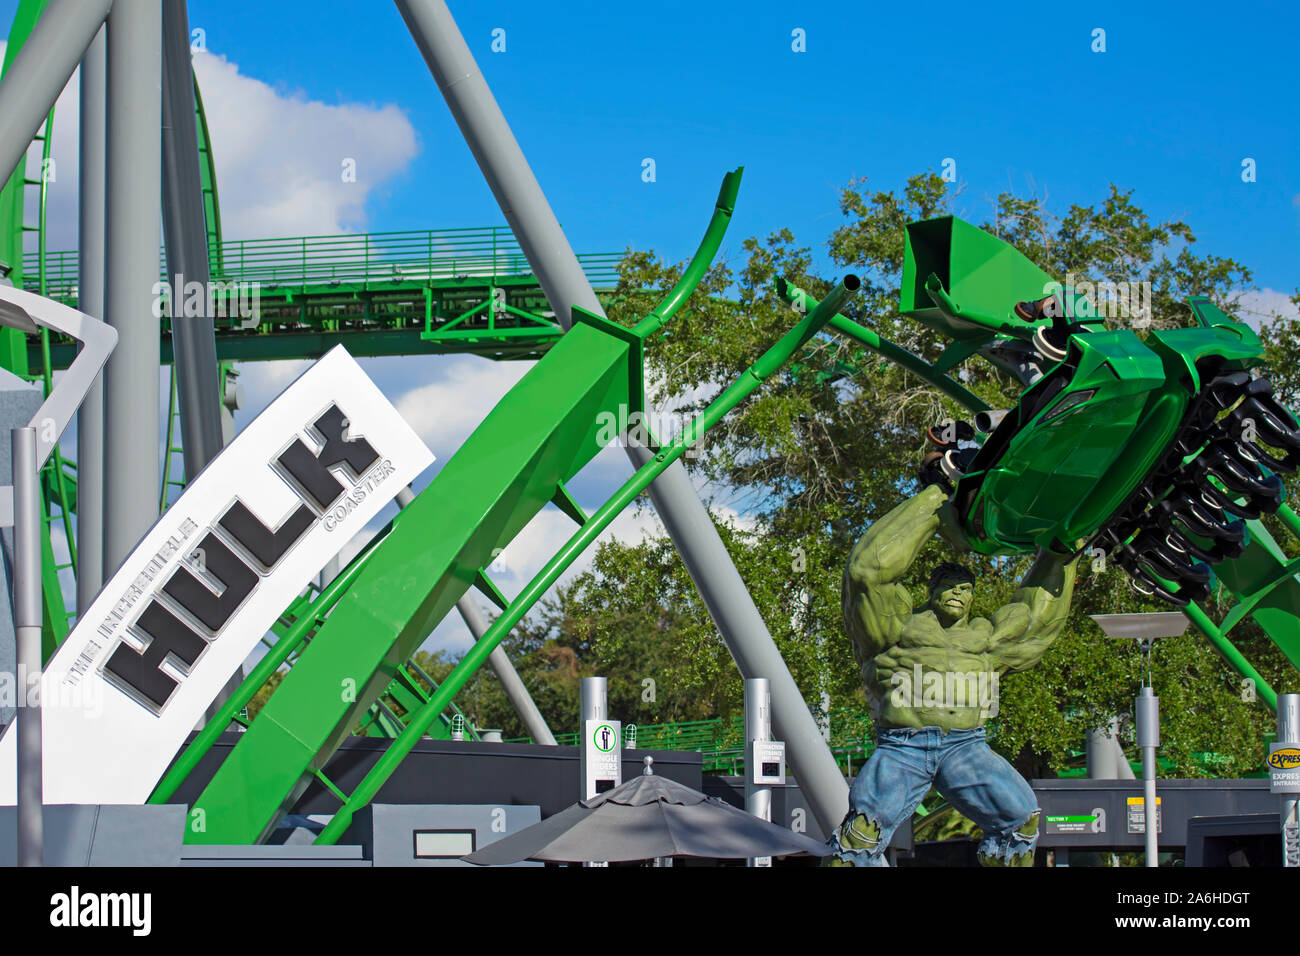 Montagnes russes de l'Incroyable Hulk, Islands of Adventure, Universal Studios Orlando, Floride, USA Banque D'Images